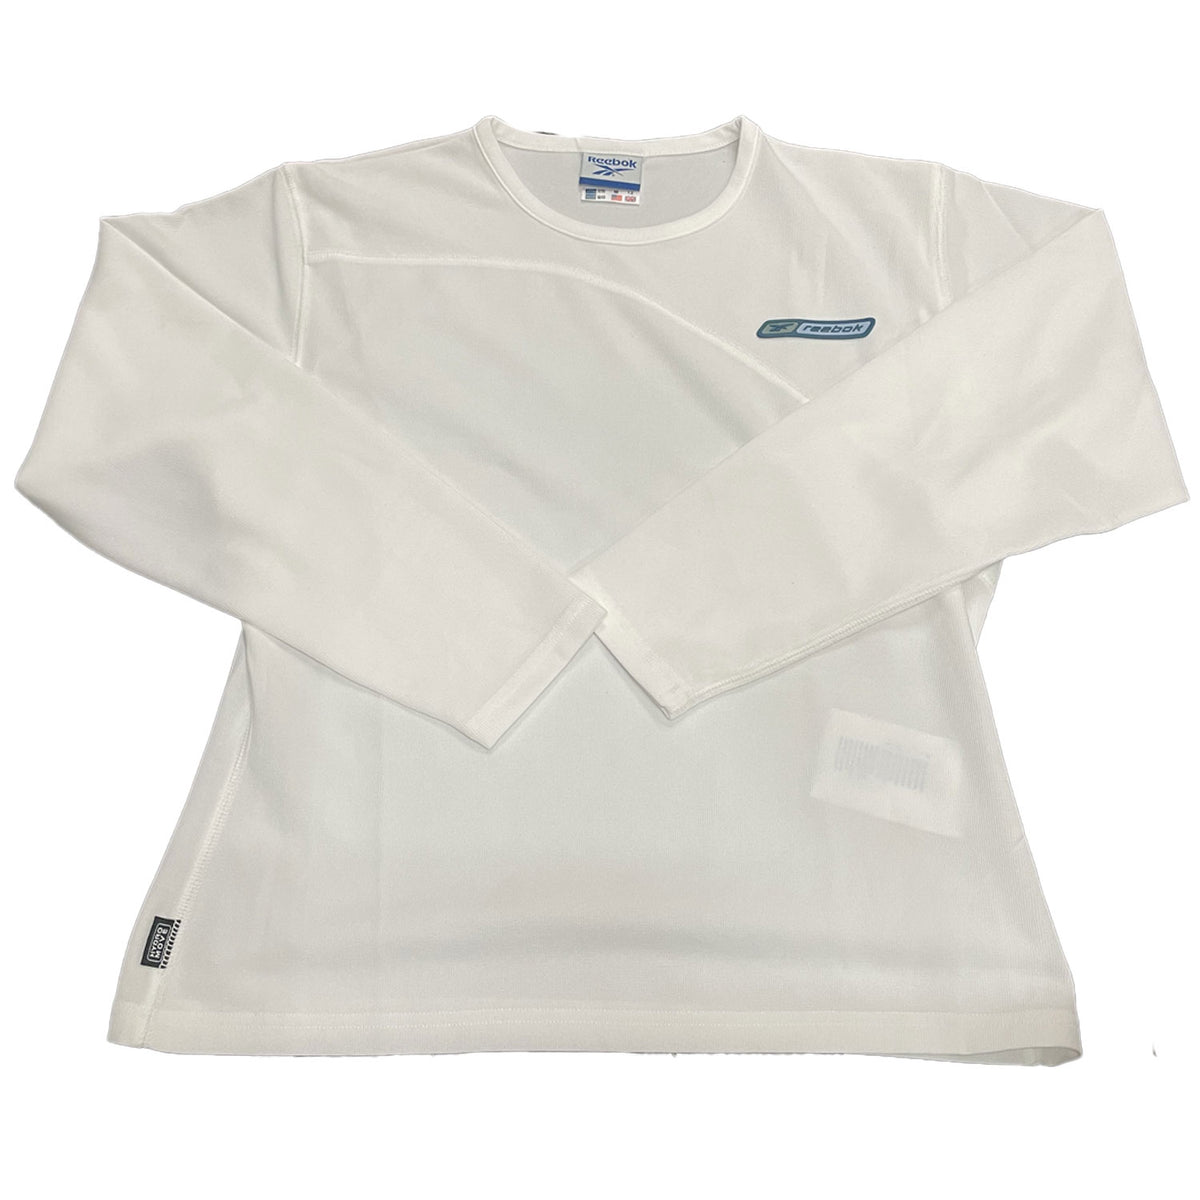 Reebok Women Athletics Sports L/S Shirt - White - UK Size 12